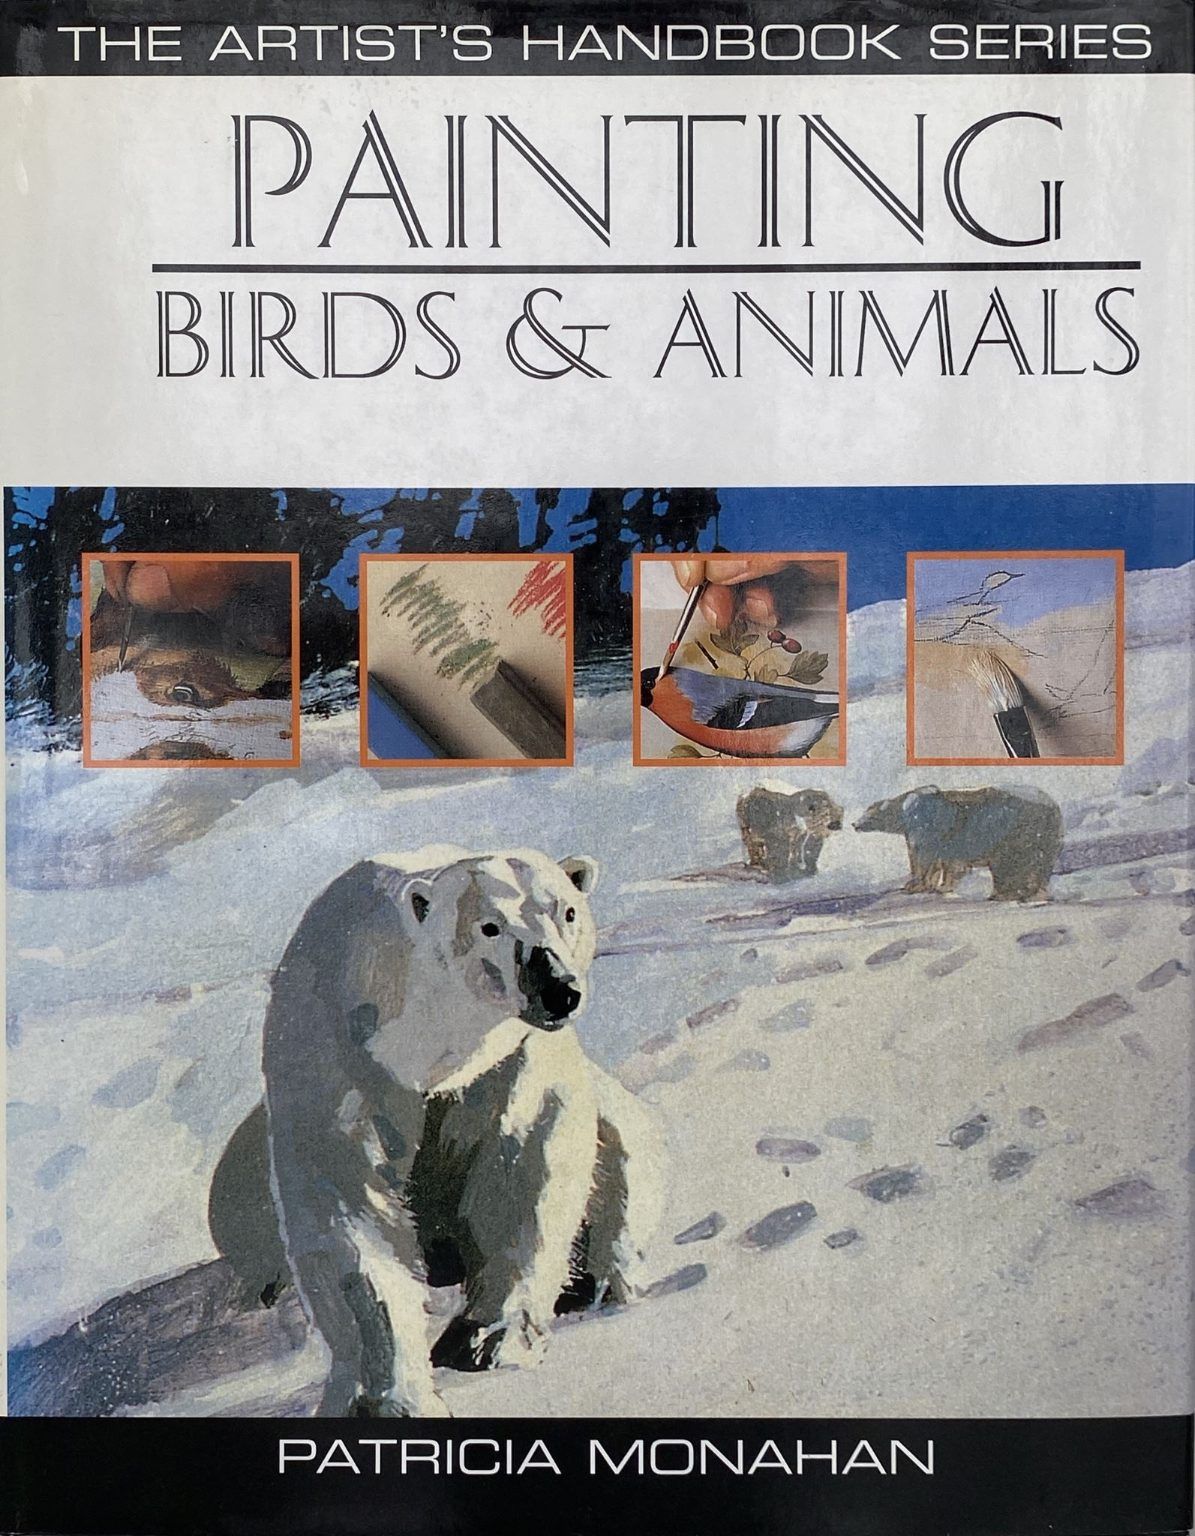 PAINTING BIRDS AND ANIMALS: The Artist's Handbook Series